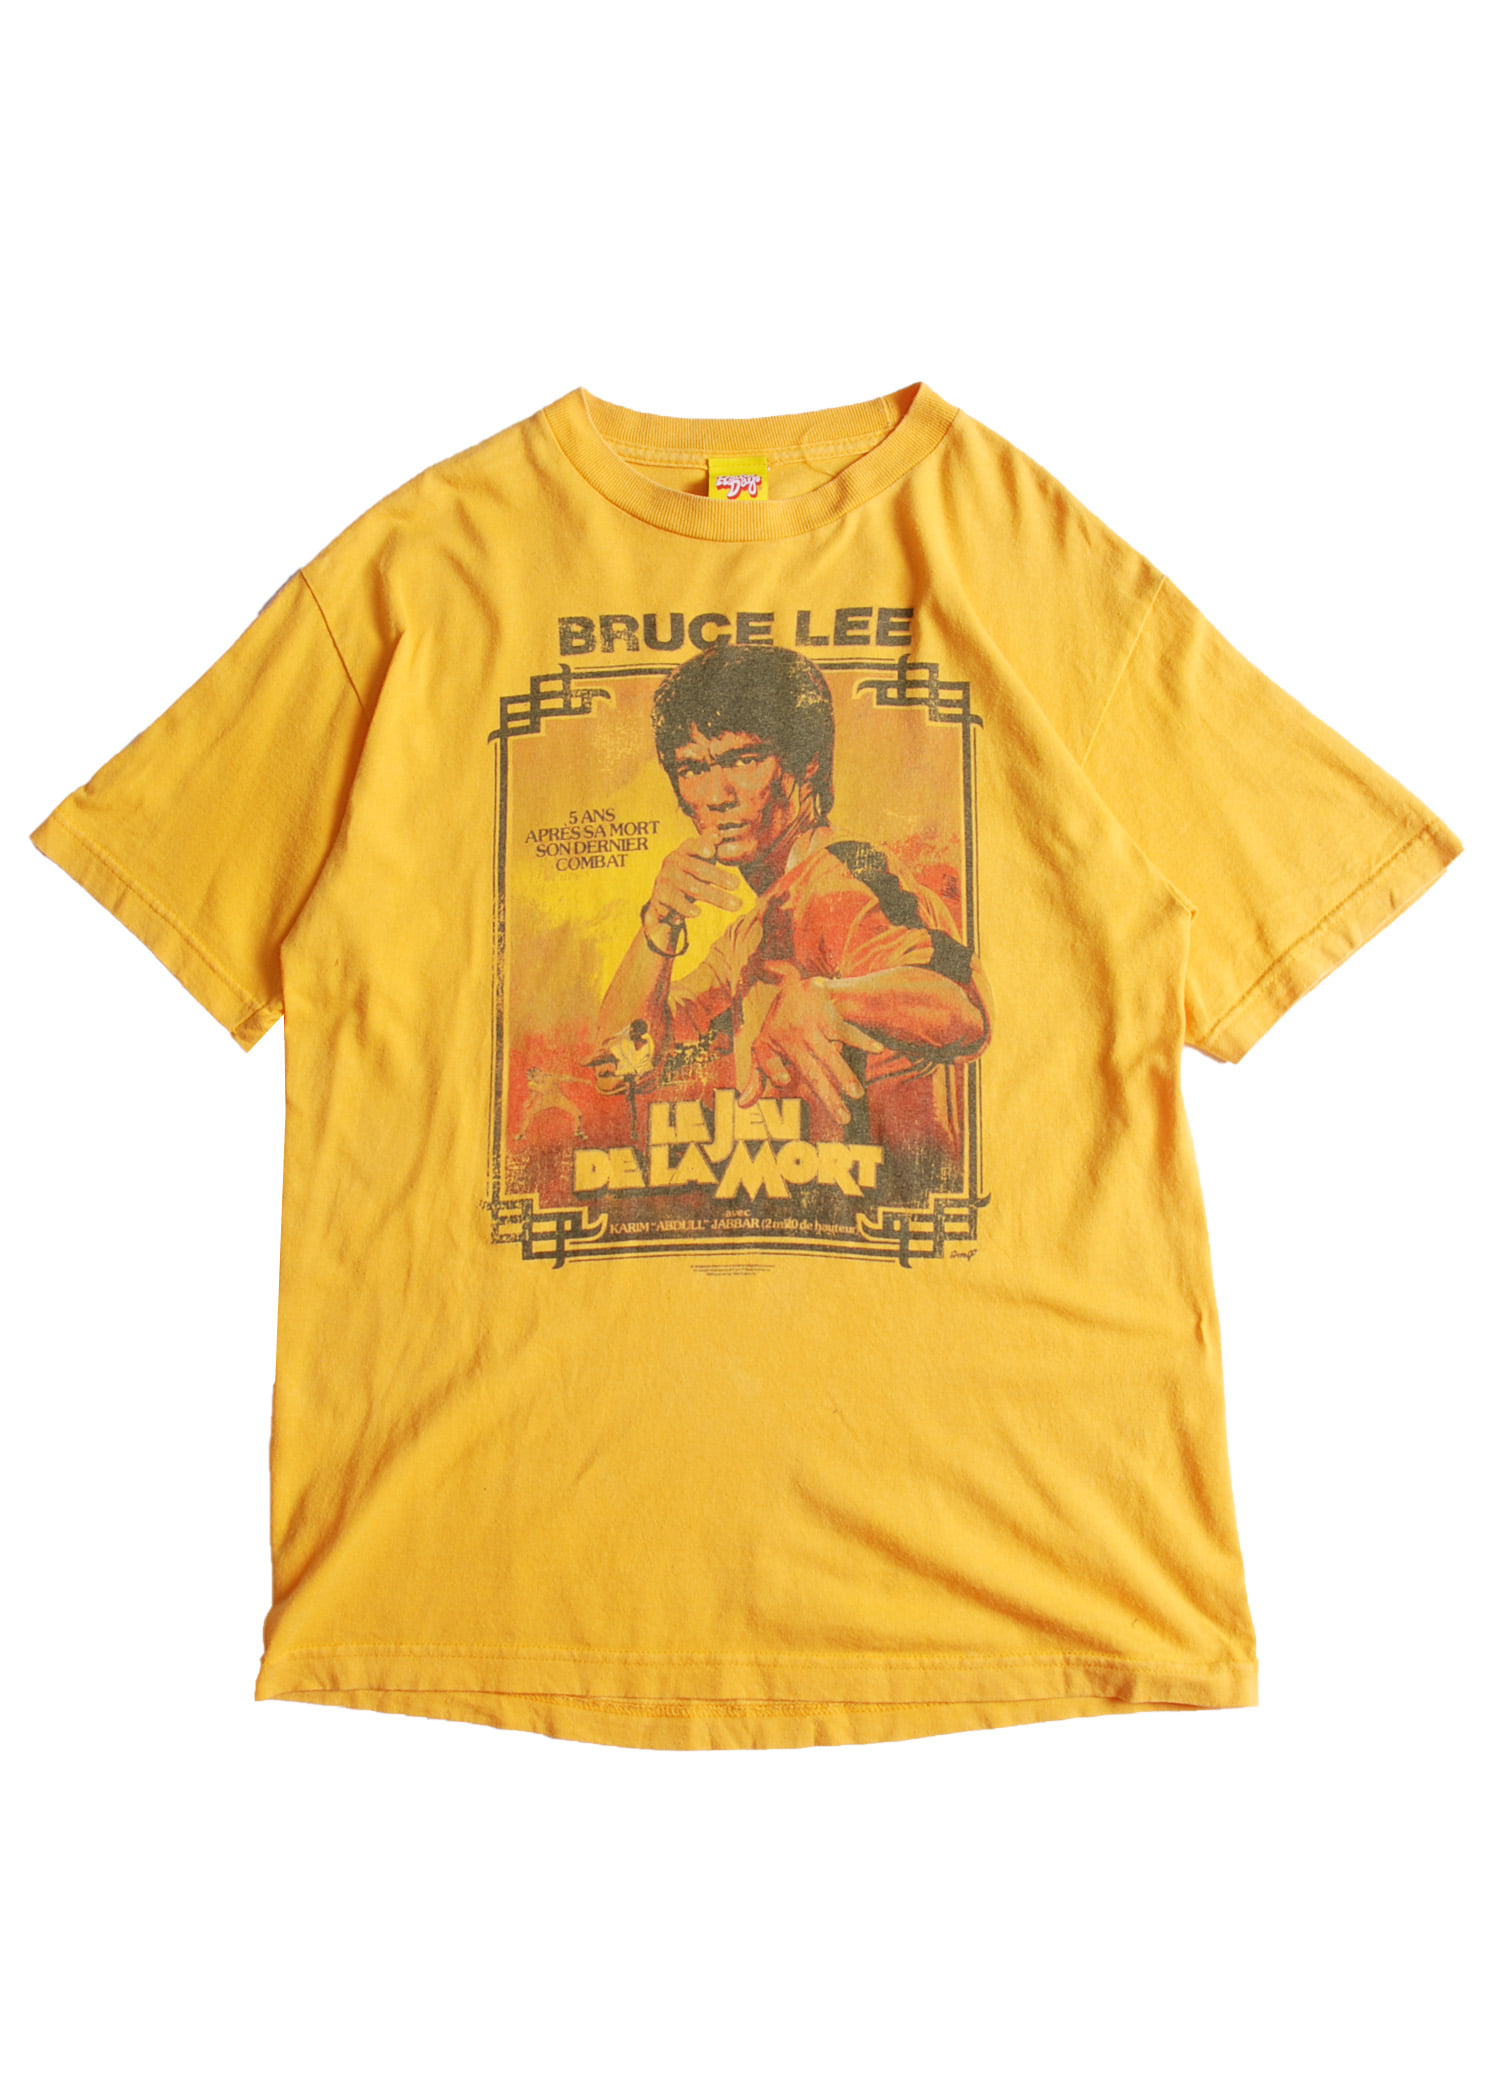 radio days bruce Lee t-shirts (ad 2005)